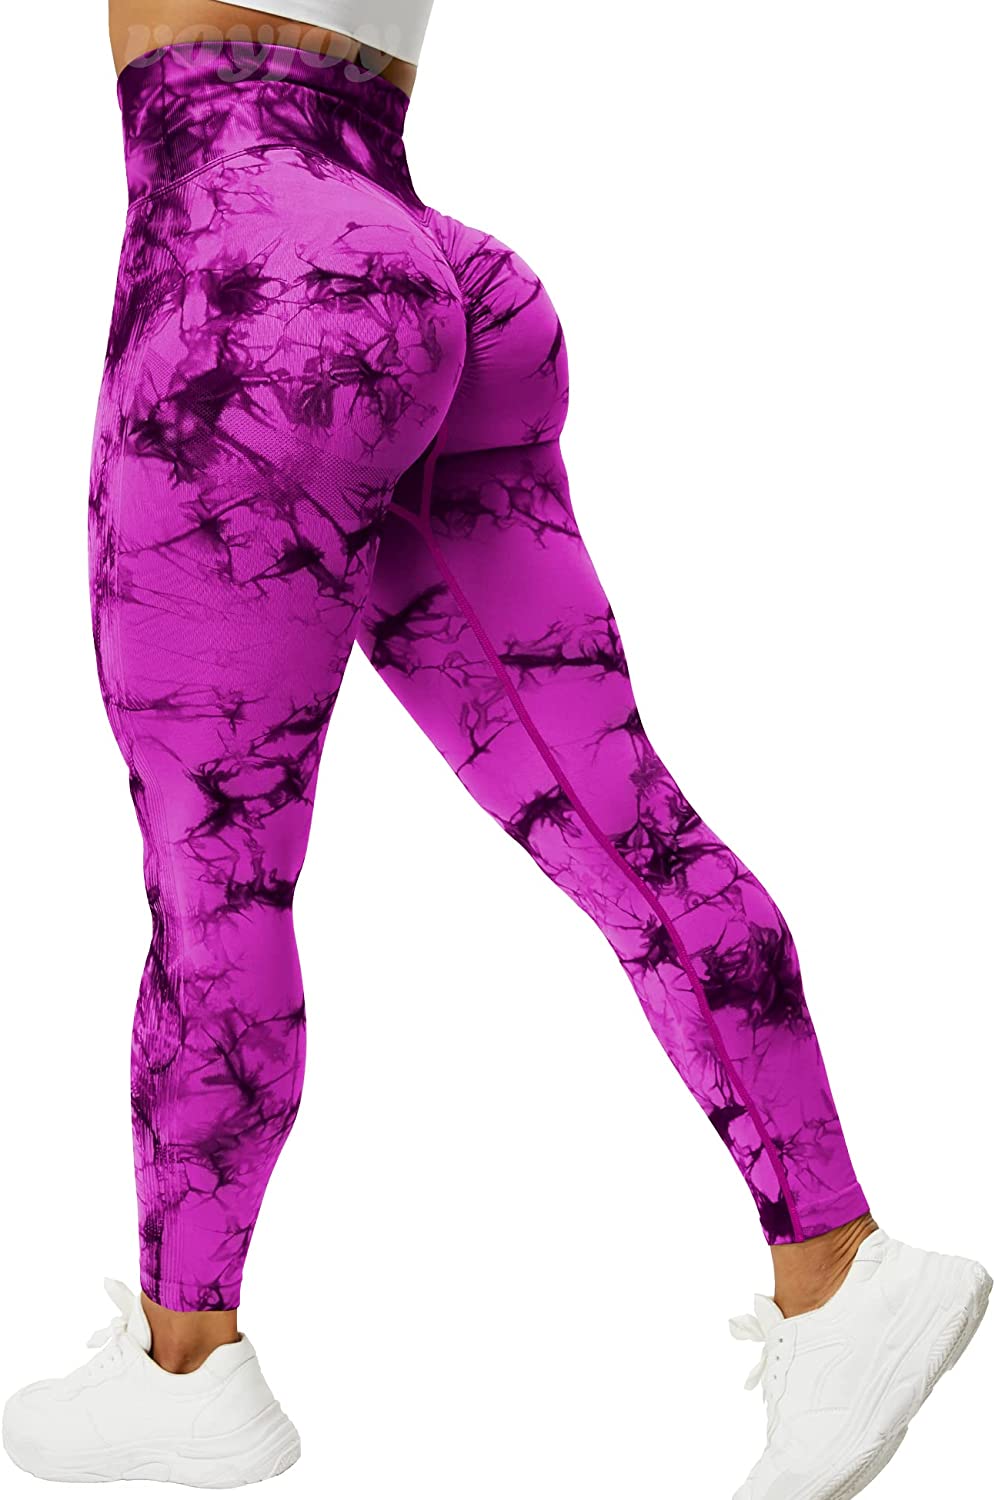  Women Tie Dye Scrunch Butt Lift Leggings High Waisted  Seamless Yoga Pants Sports Workout Compression Tights Purple L